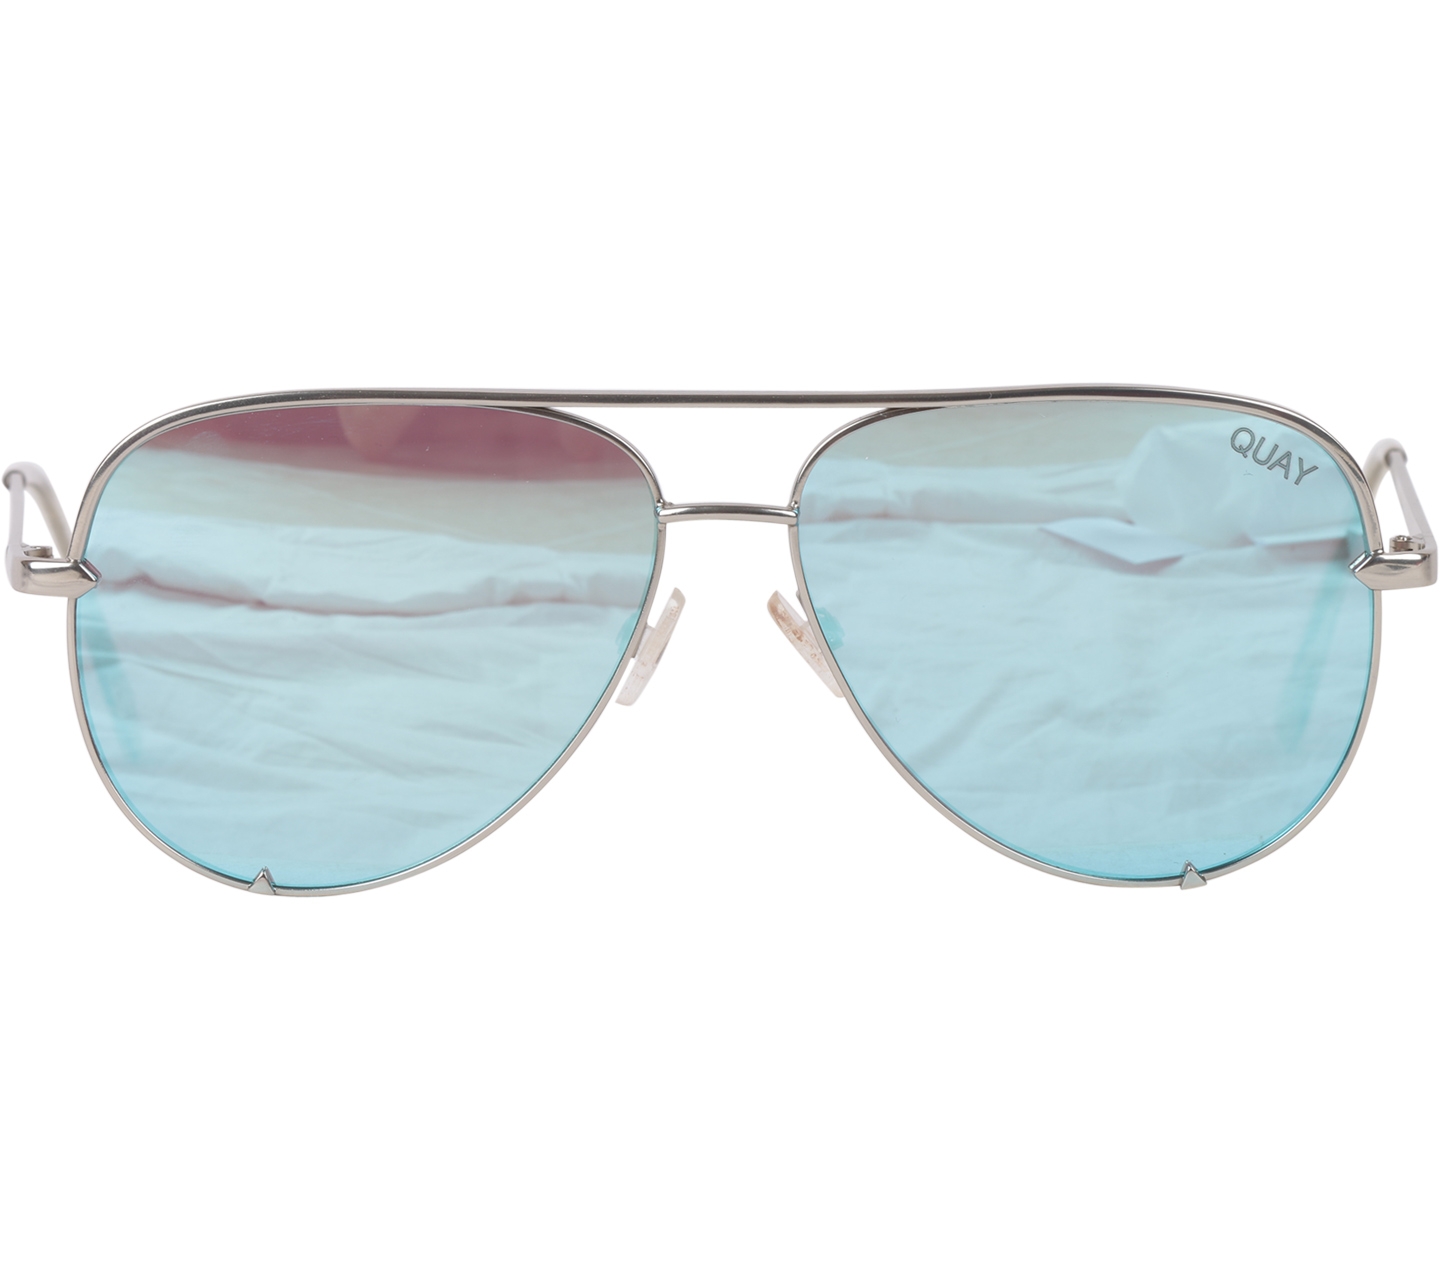 Quay Australia Blue And Silver Sunglasses